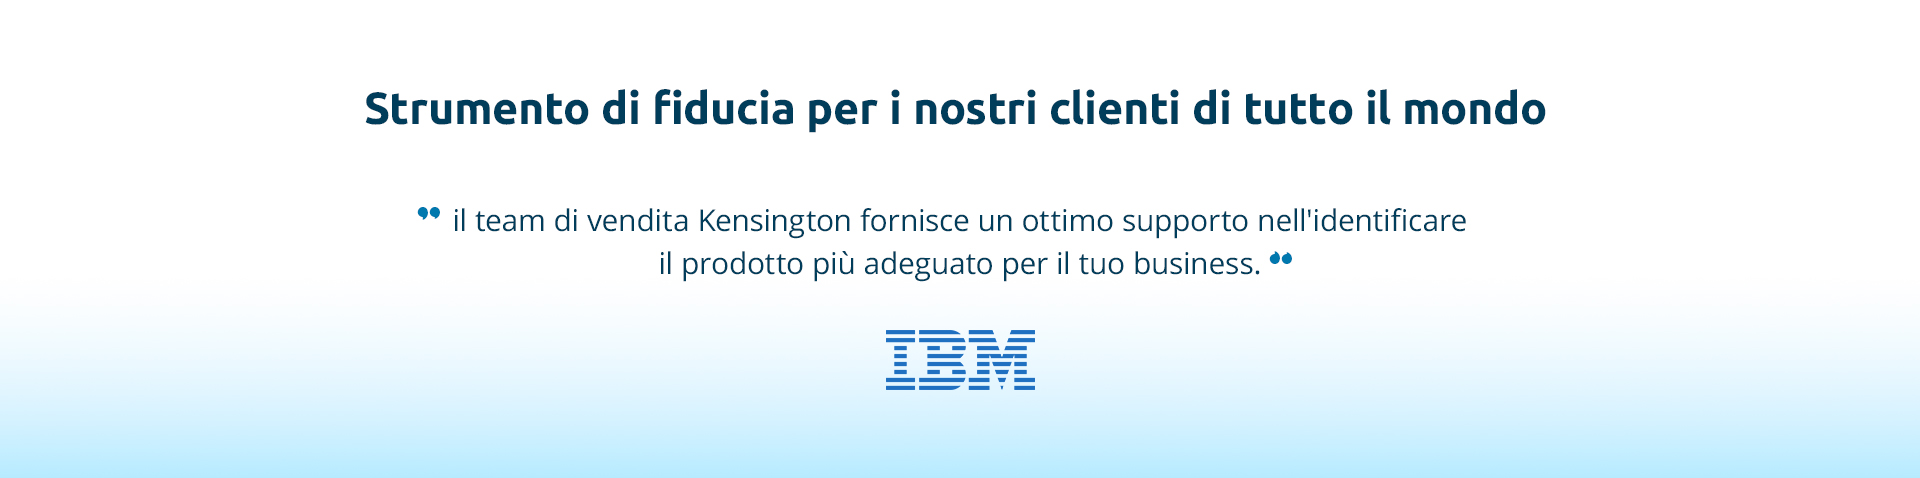 IBM quote